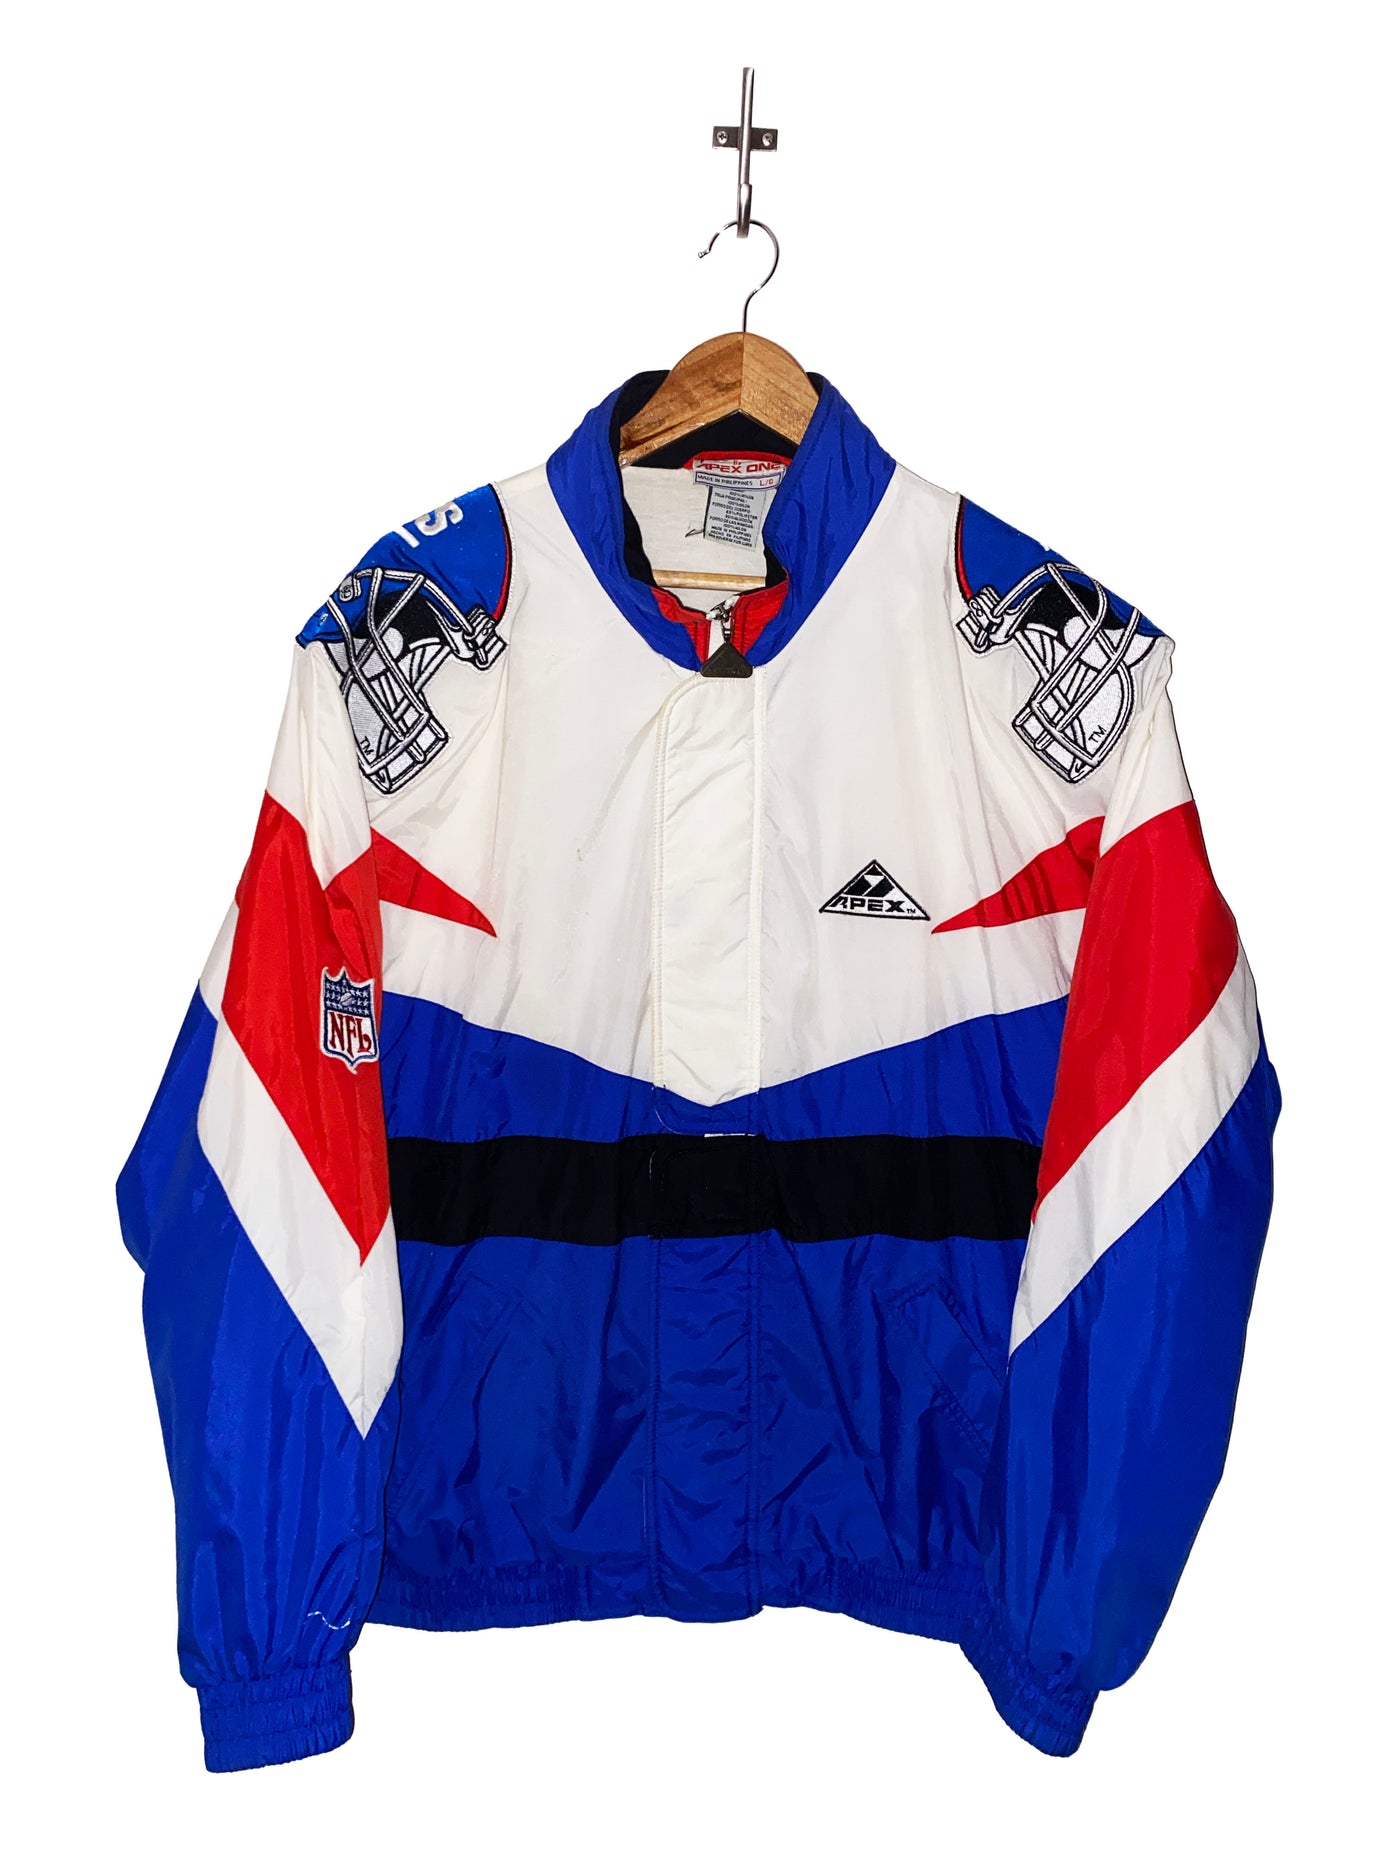 Vintage Apex New York Giants Jacket